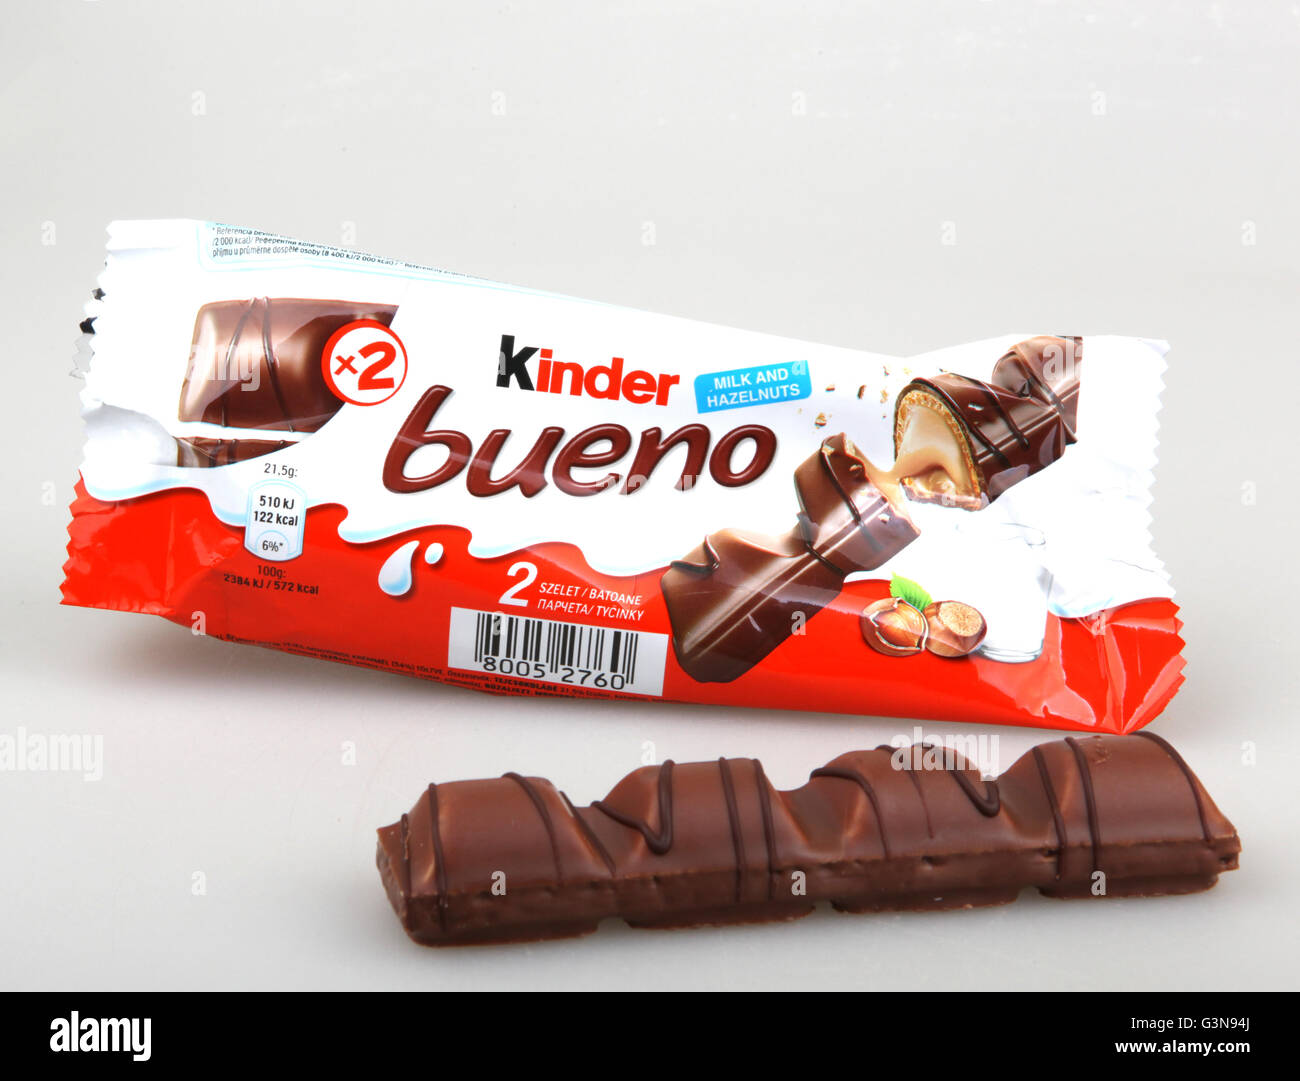 https://c8.alamy.com/comp/G3N94J/aytos-bulgaria-june-13-2016-kinder-bueno-chocolate-candy-bar-kinder-G3N94J.jpg